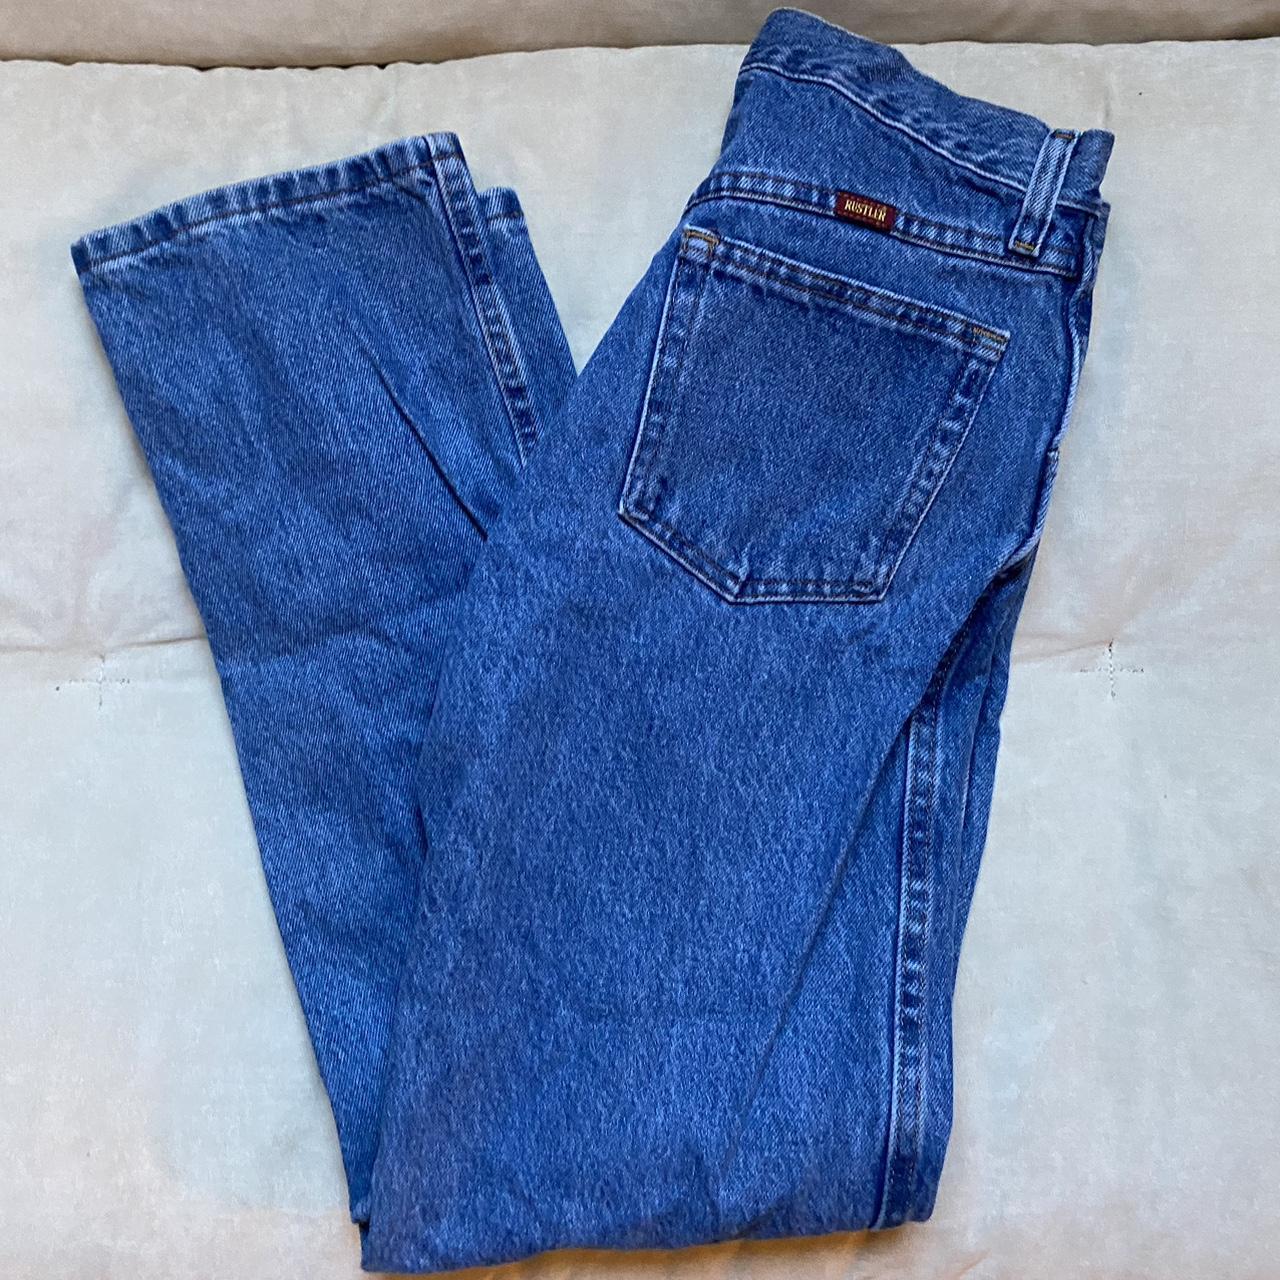 Vintage rustler jeans 30x30 worn a few times but... - Depop